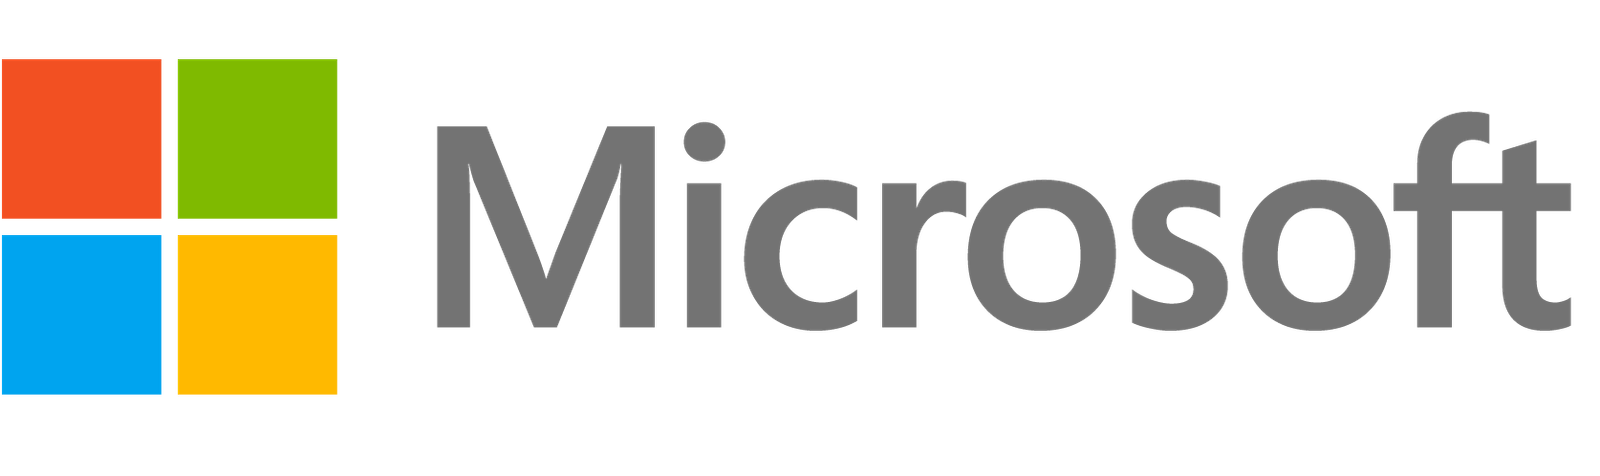 microsoft-logo-png-2411